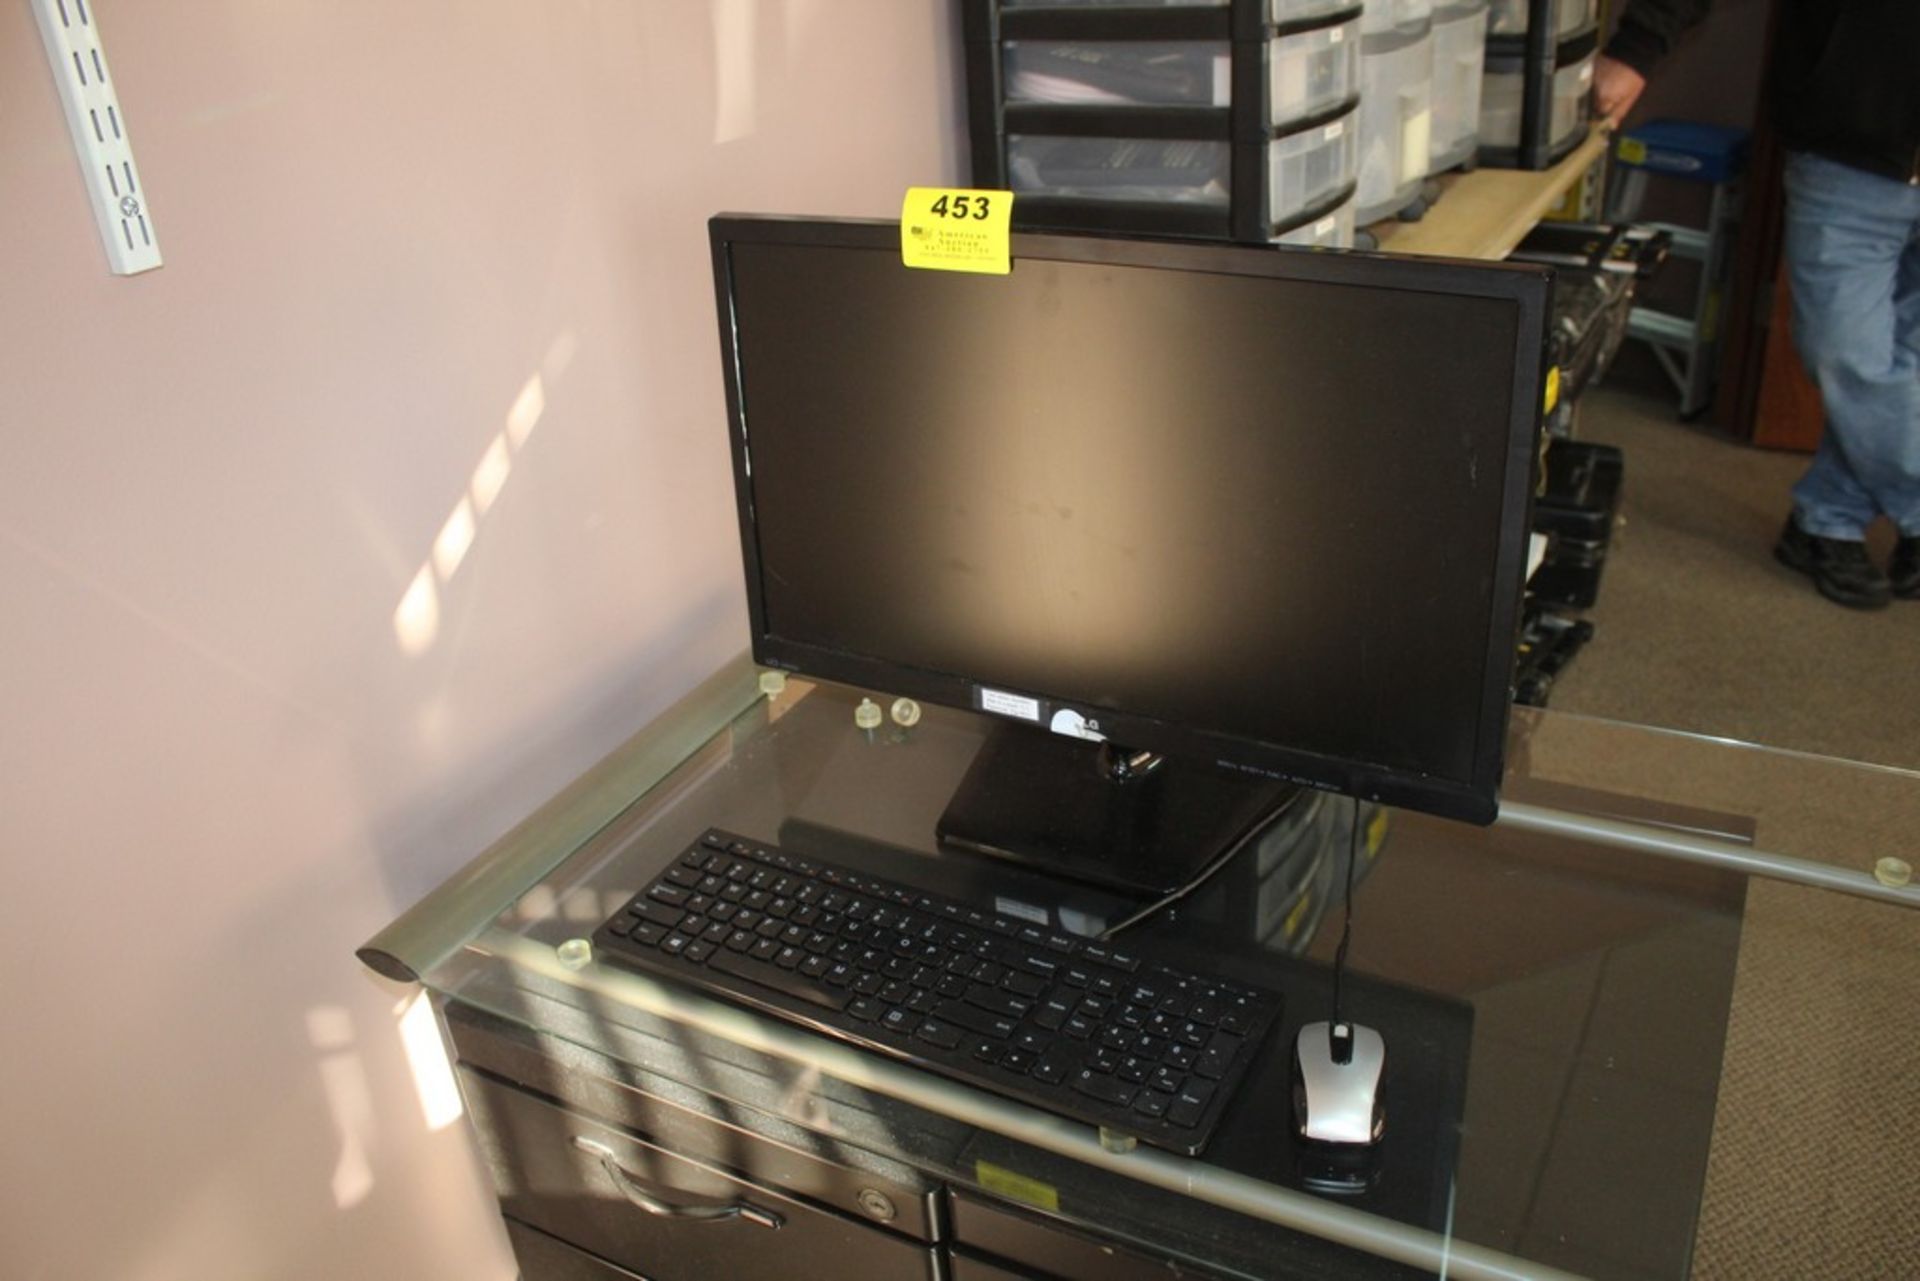 HP COMPAQ COMPUTER WITH LG 23" FLATSCREEN MONITOR, KEYBOARD, MOUSE WITH FURMAN BATTERY BACKUP